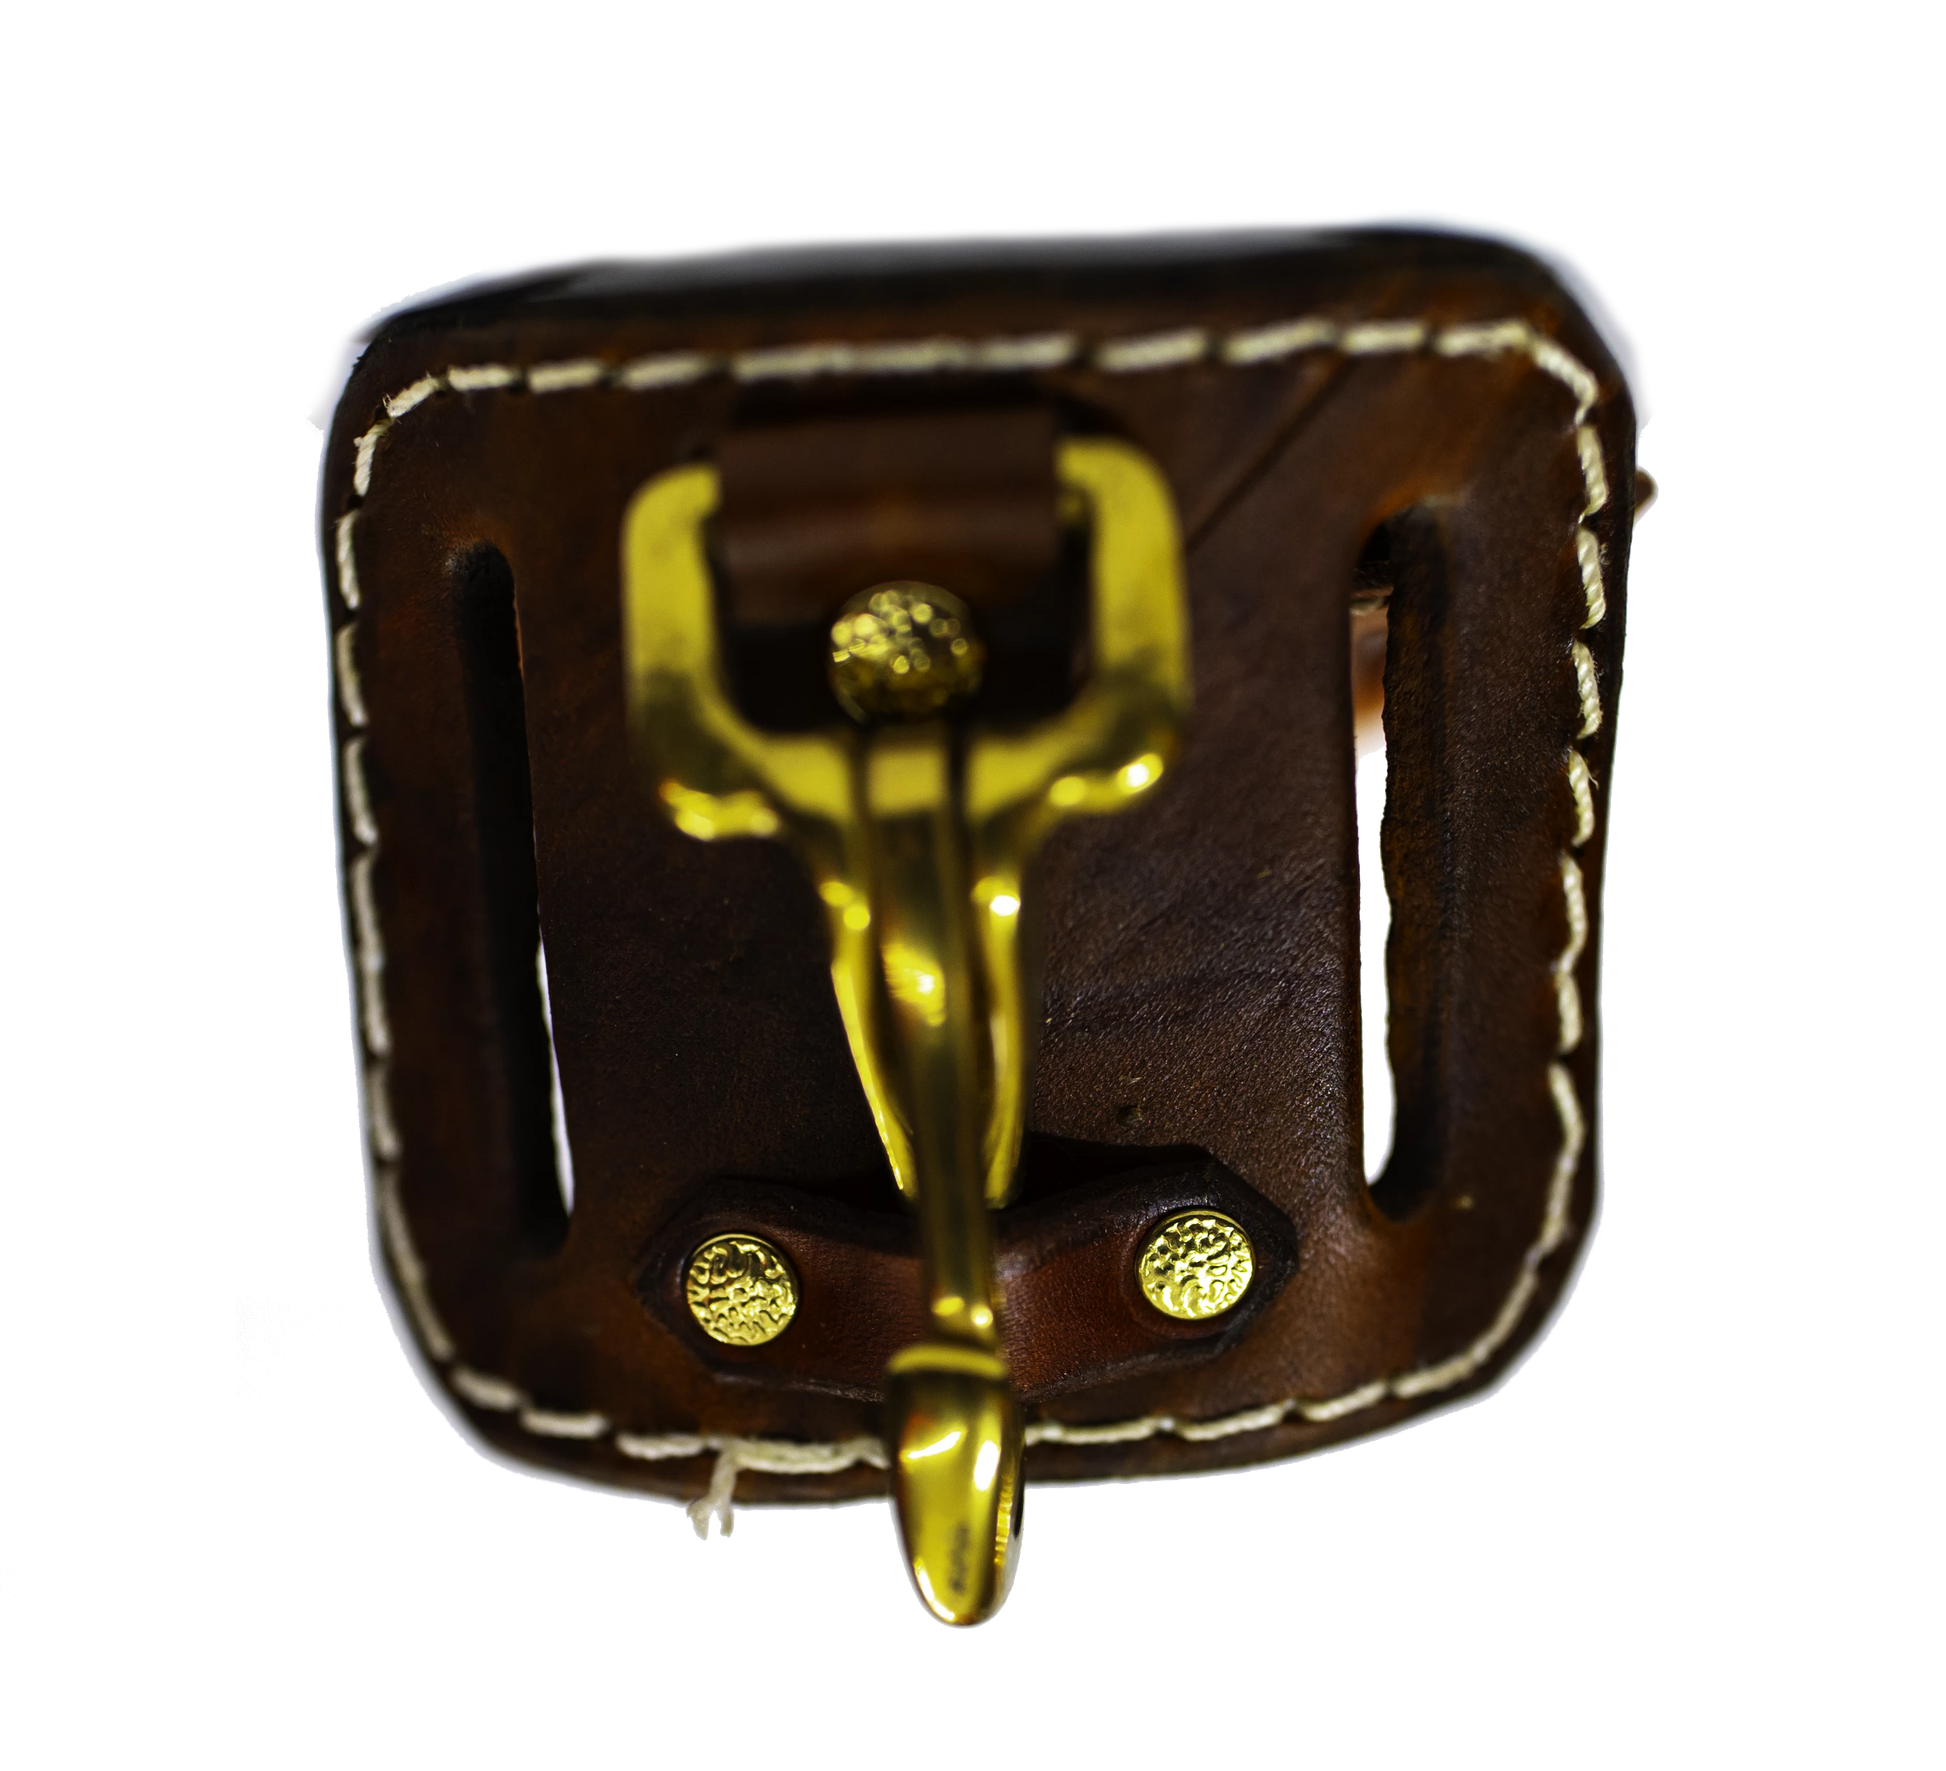 Leather Beltloop Keychain Holder - Brown